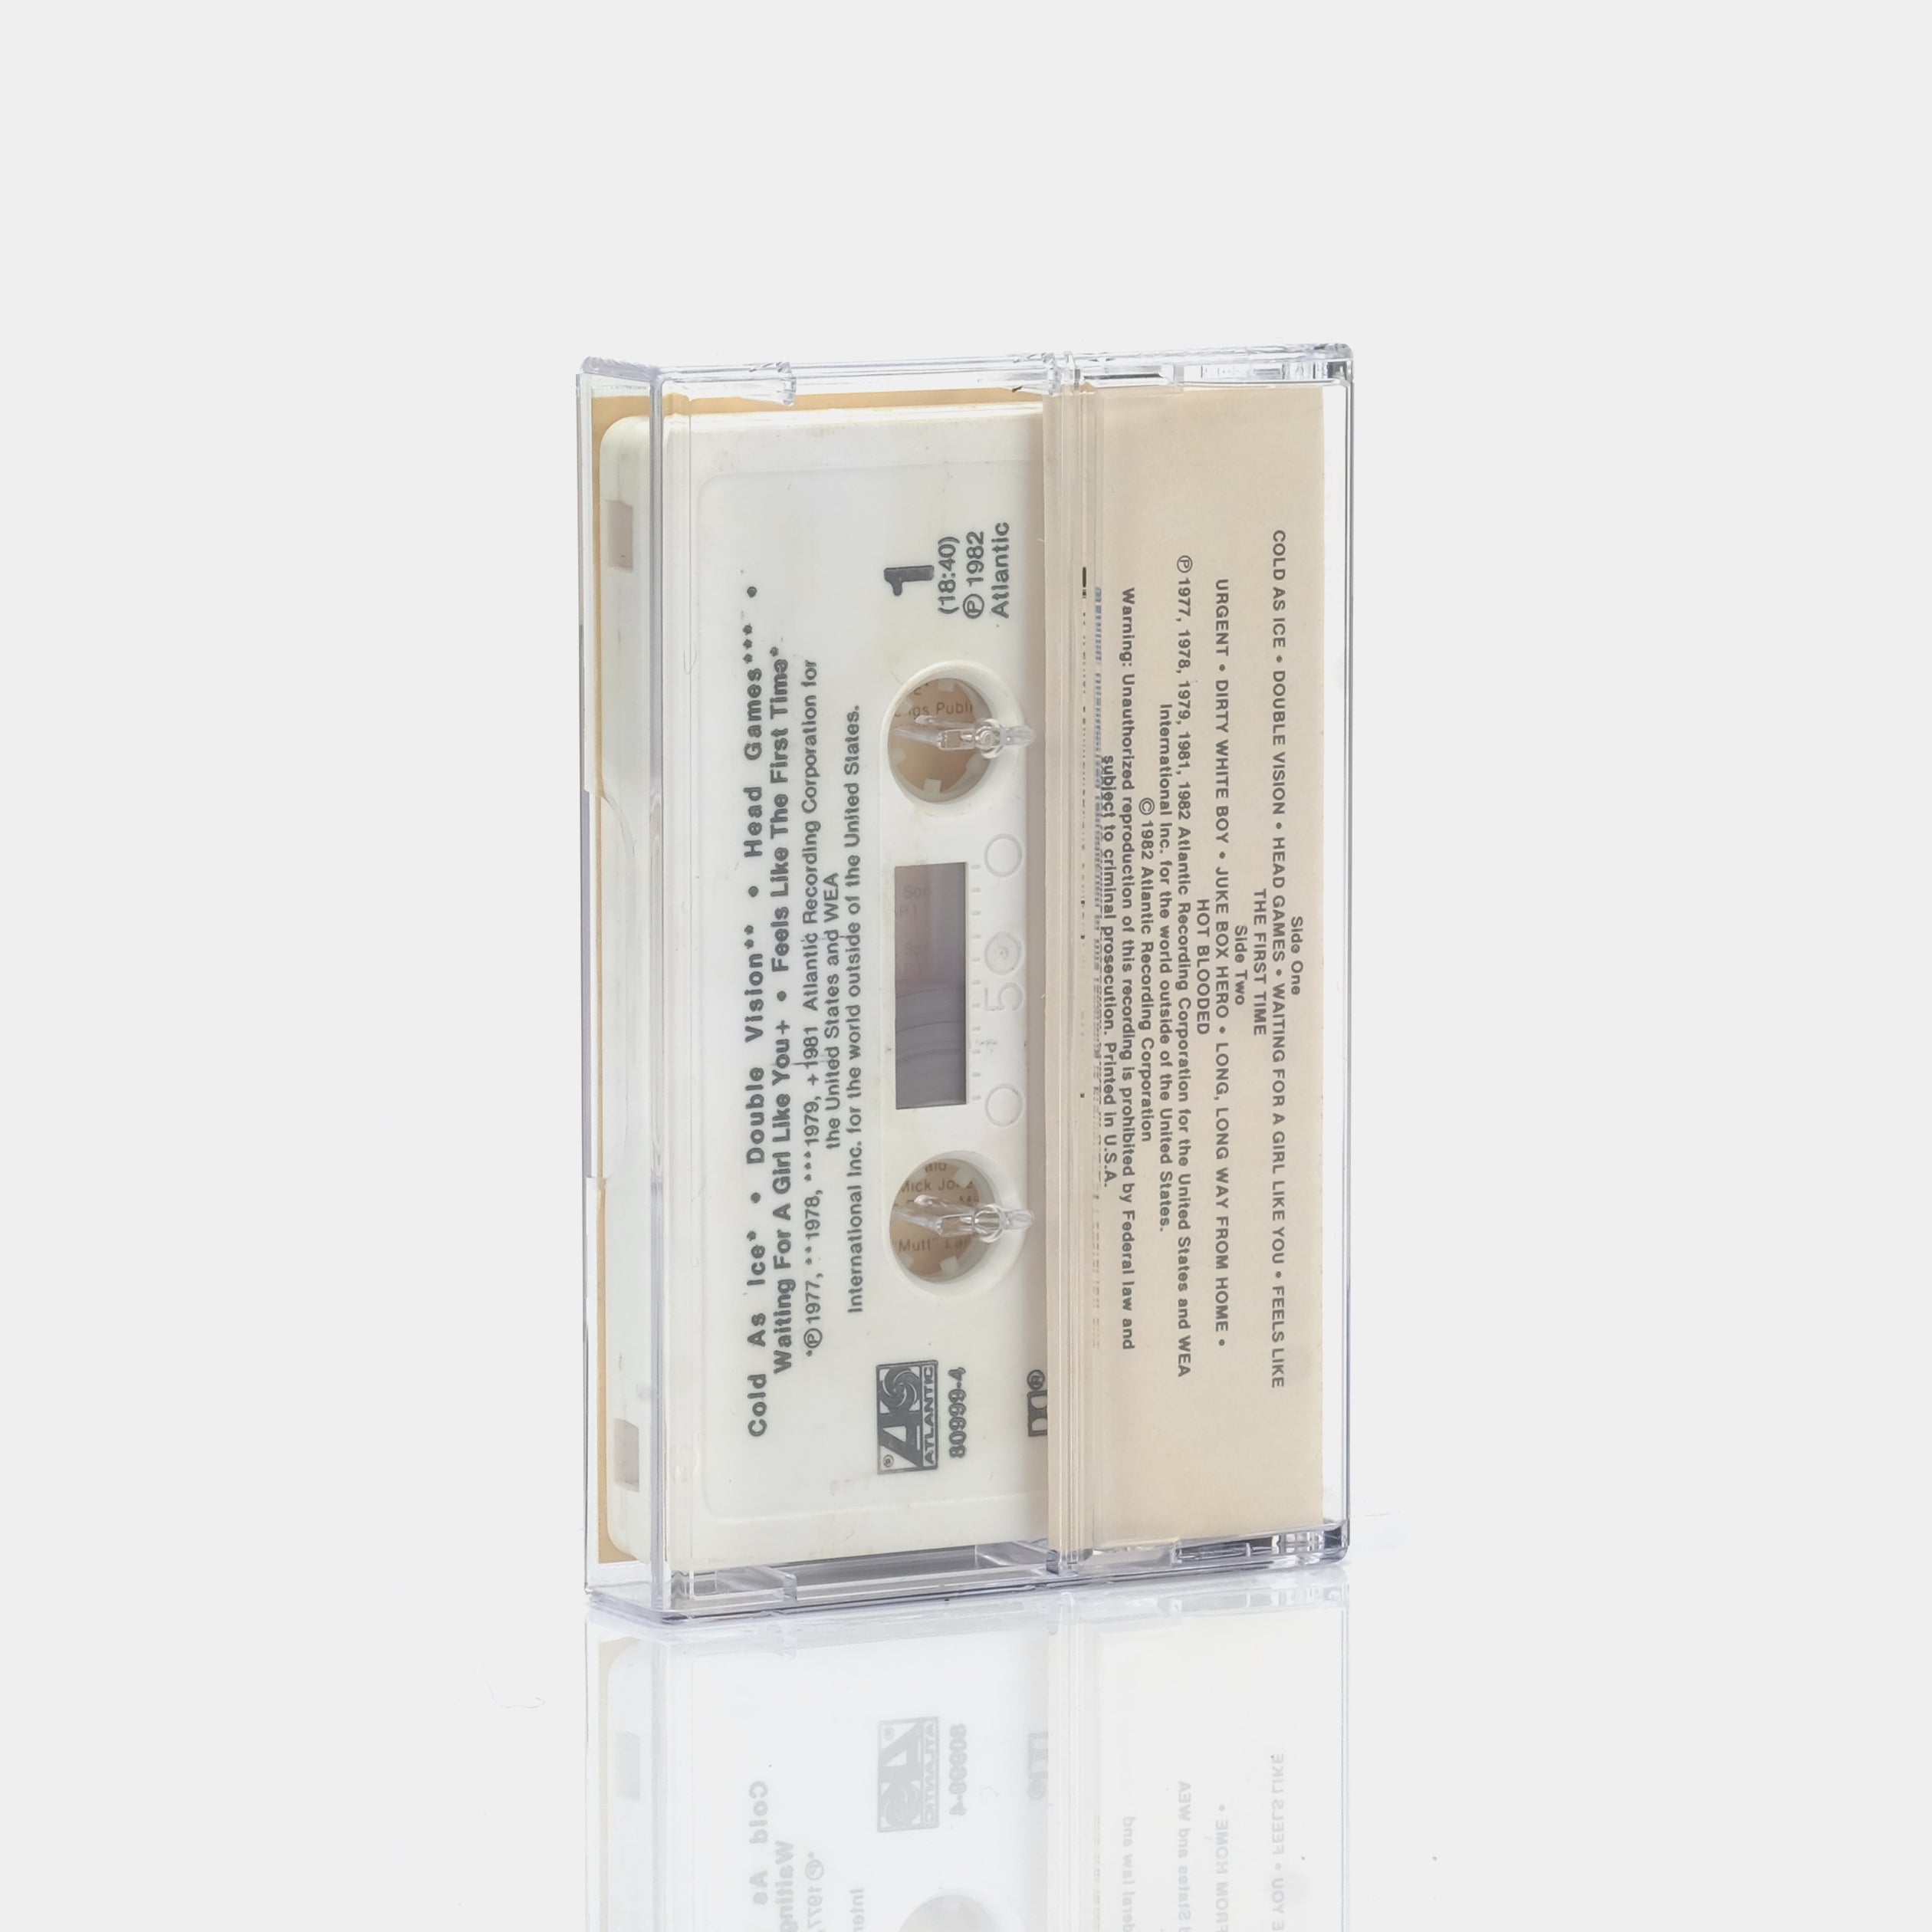 Foreigner - Records Cassette Tape